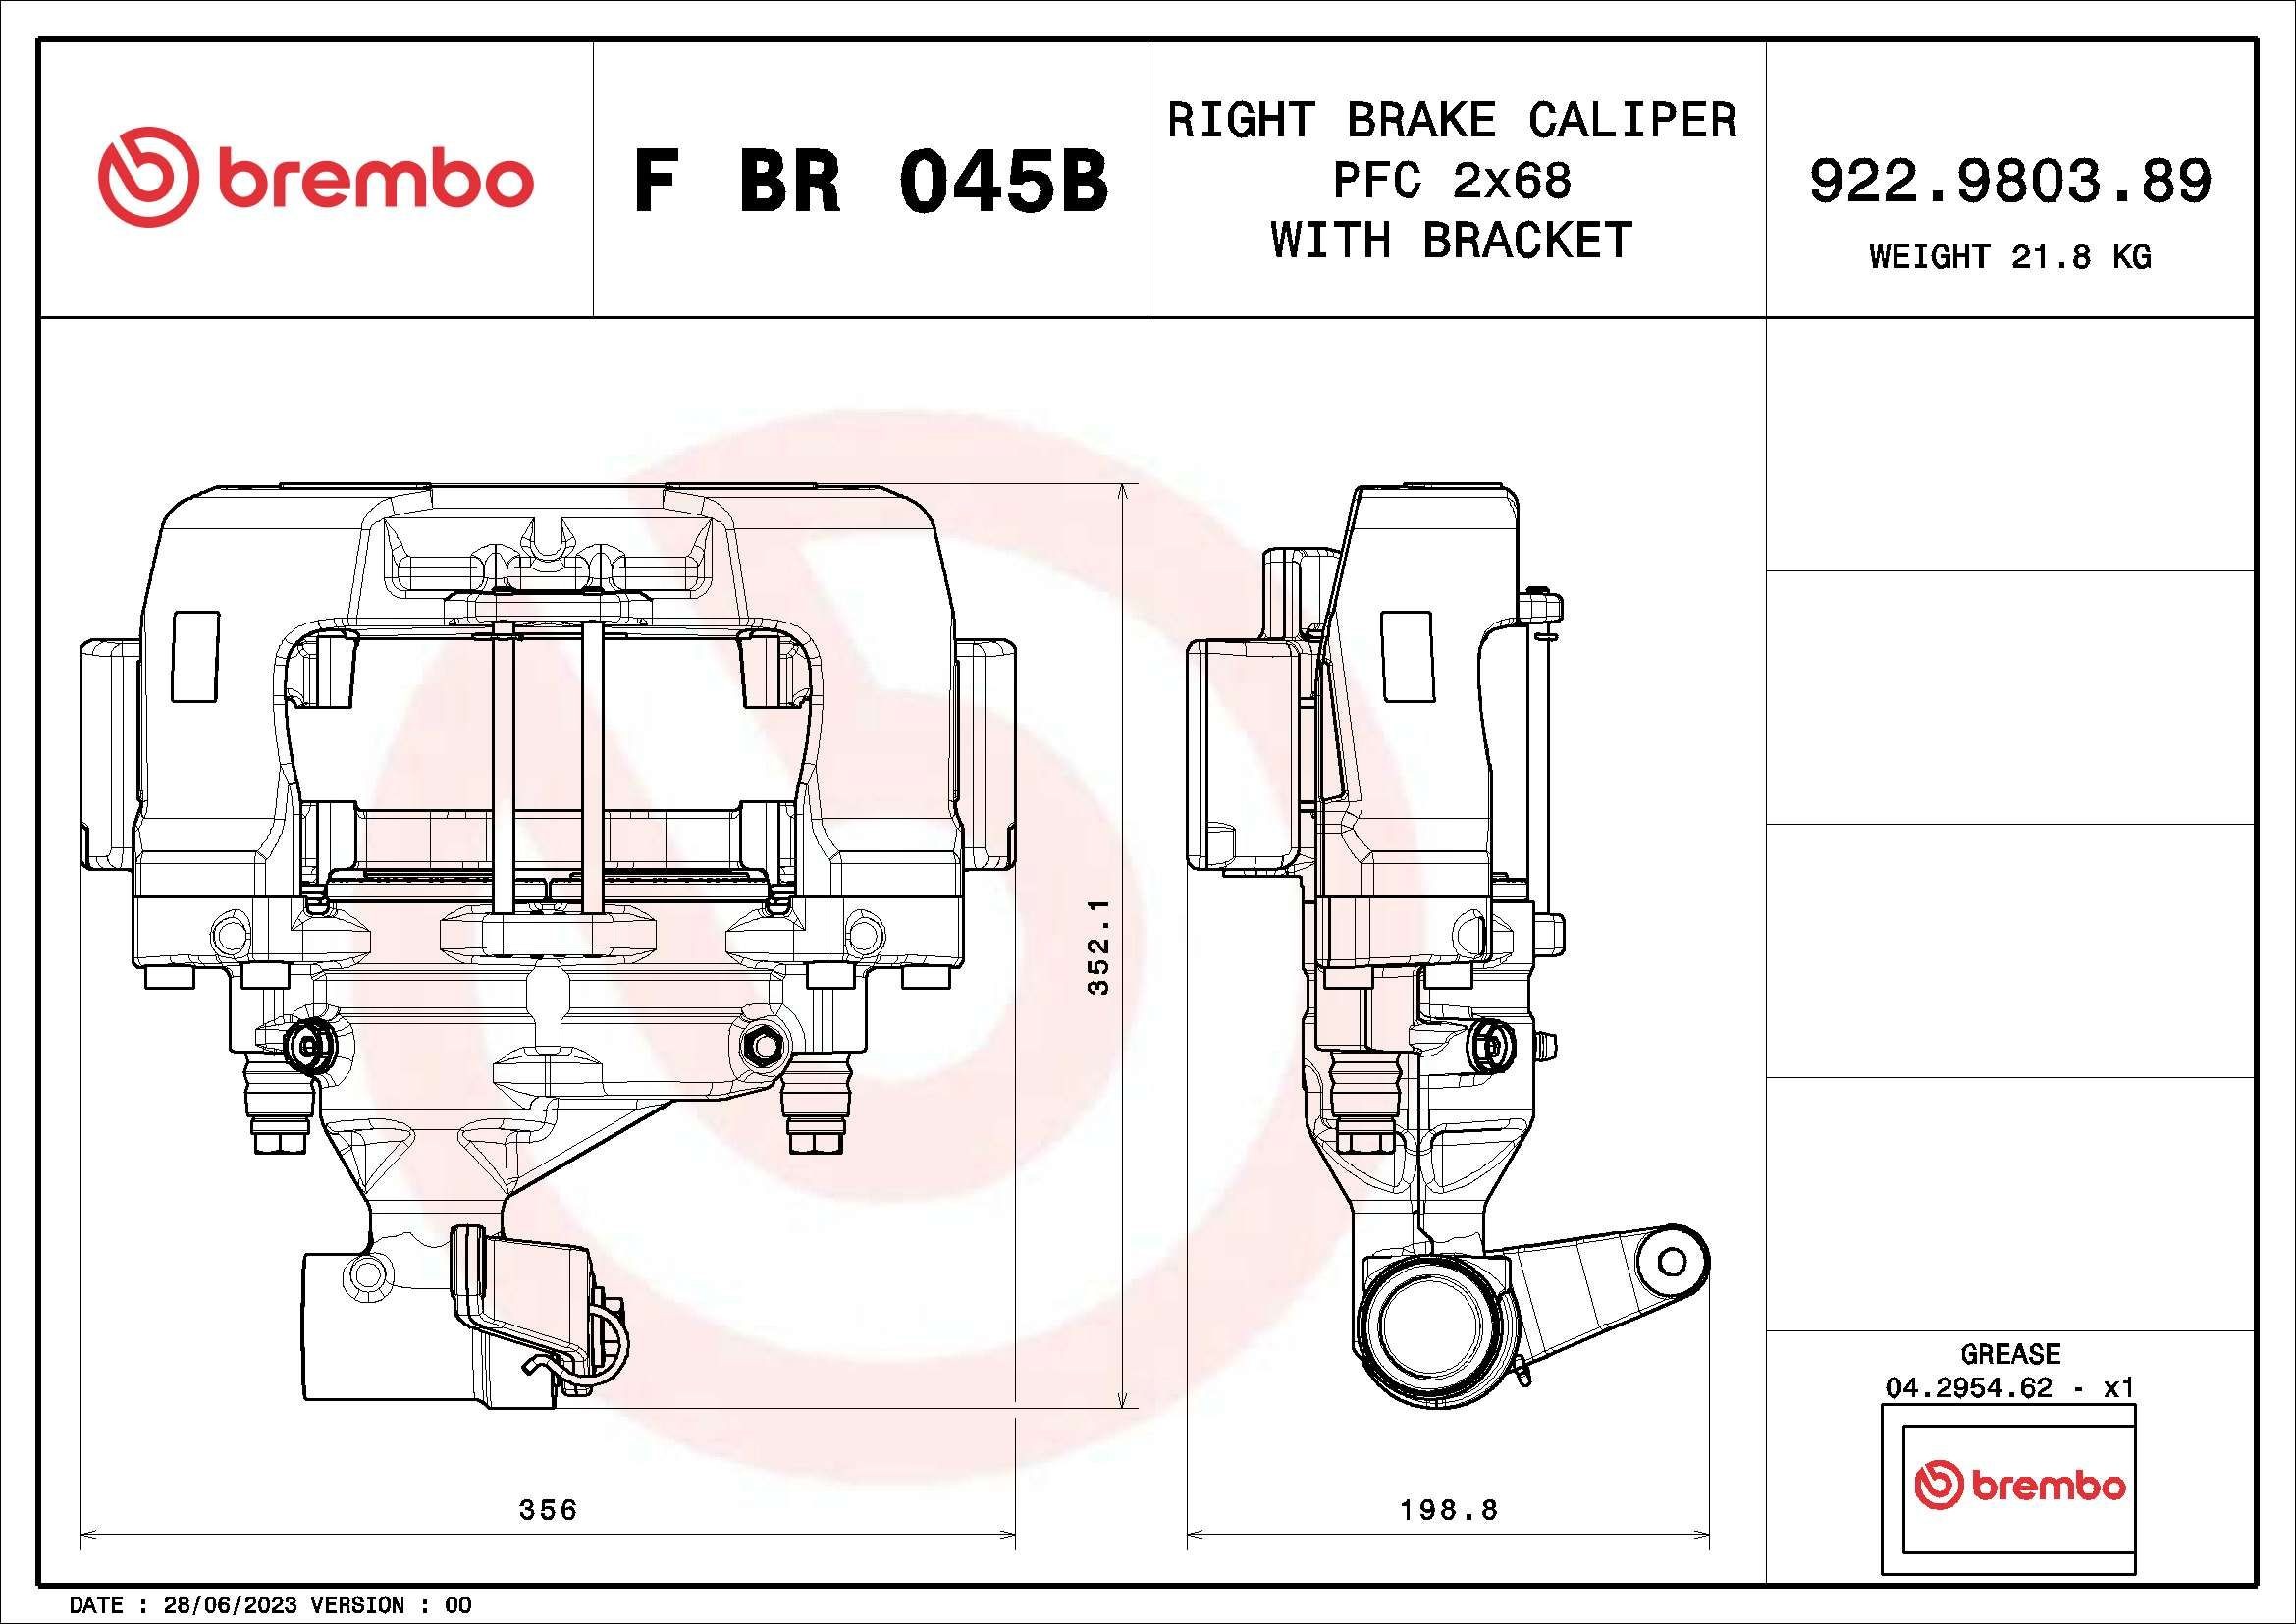 BREMBO Calipers F BR 045B